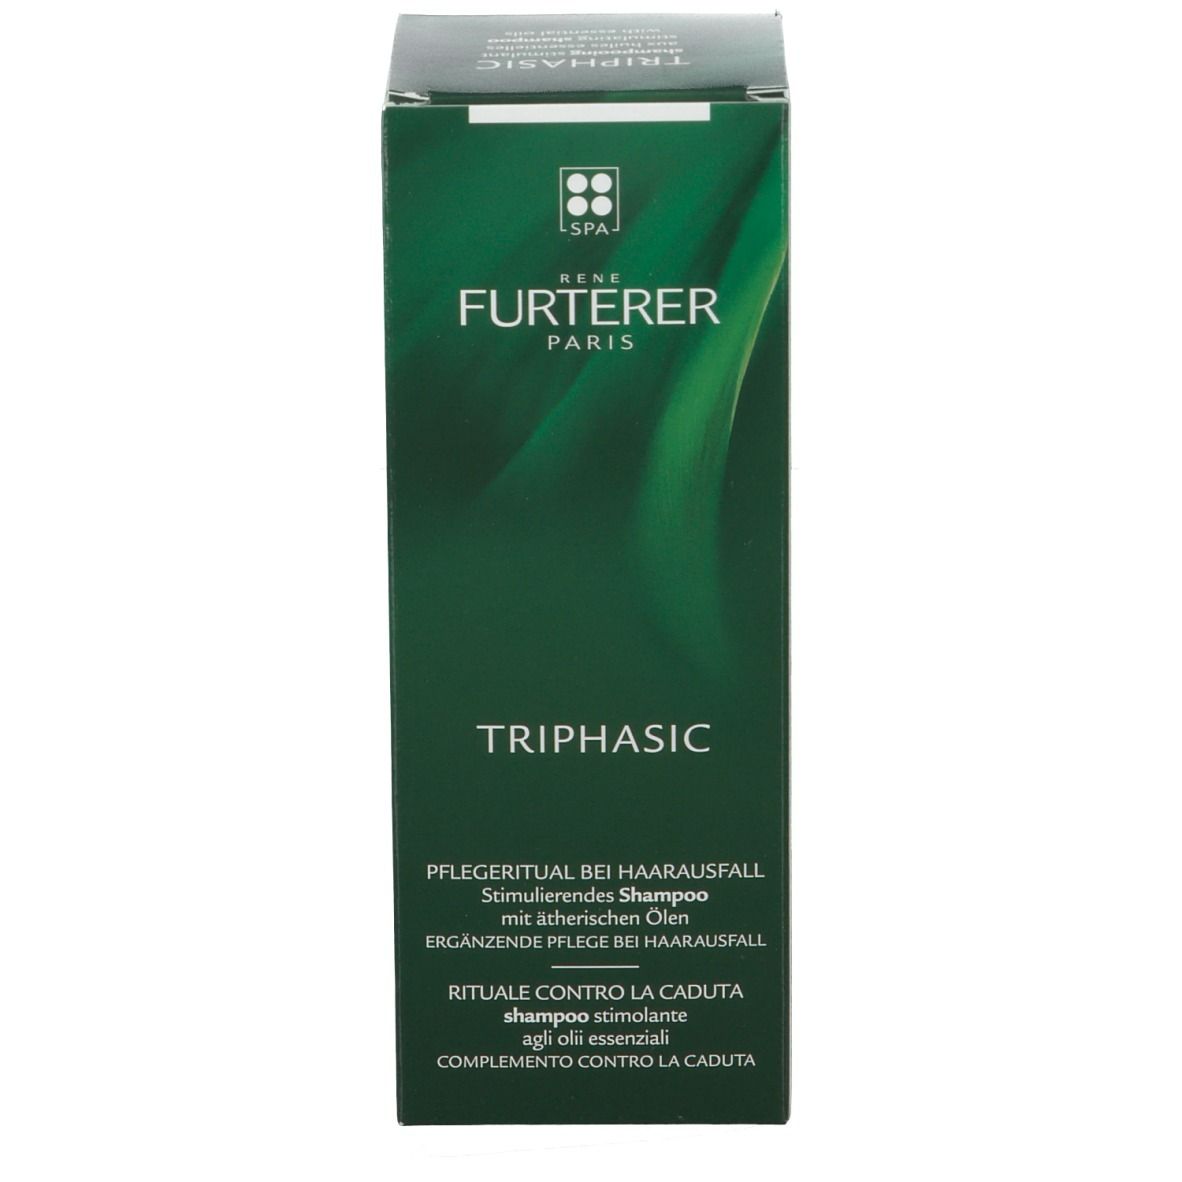 RENE FURTERER Triphasic stimulierendes Shampoo